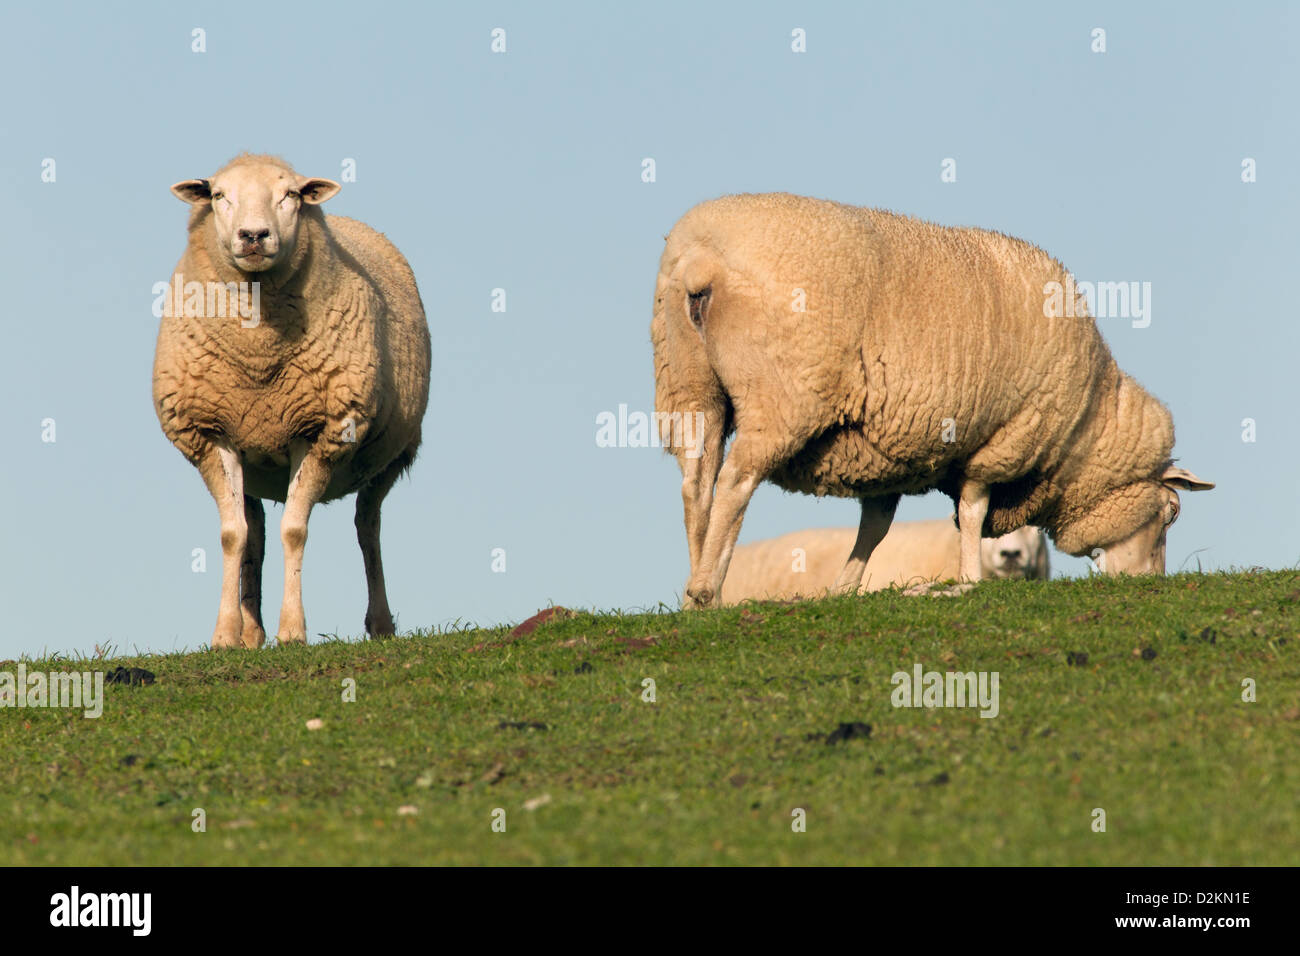 sheep grazing in a paddock Stock Photo